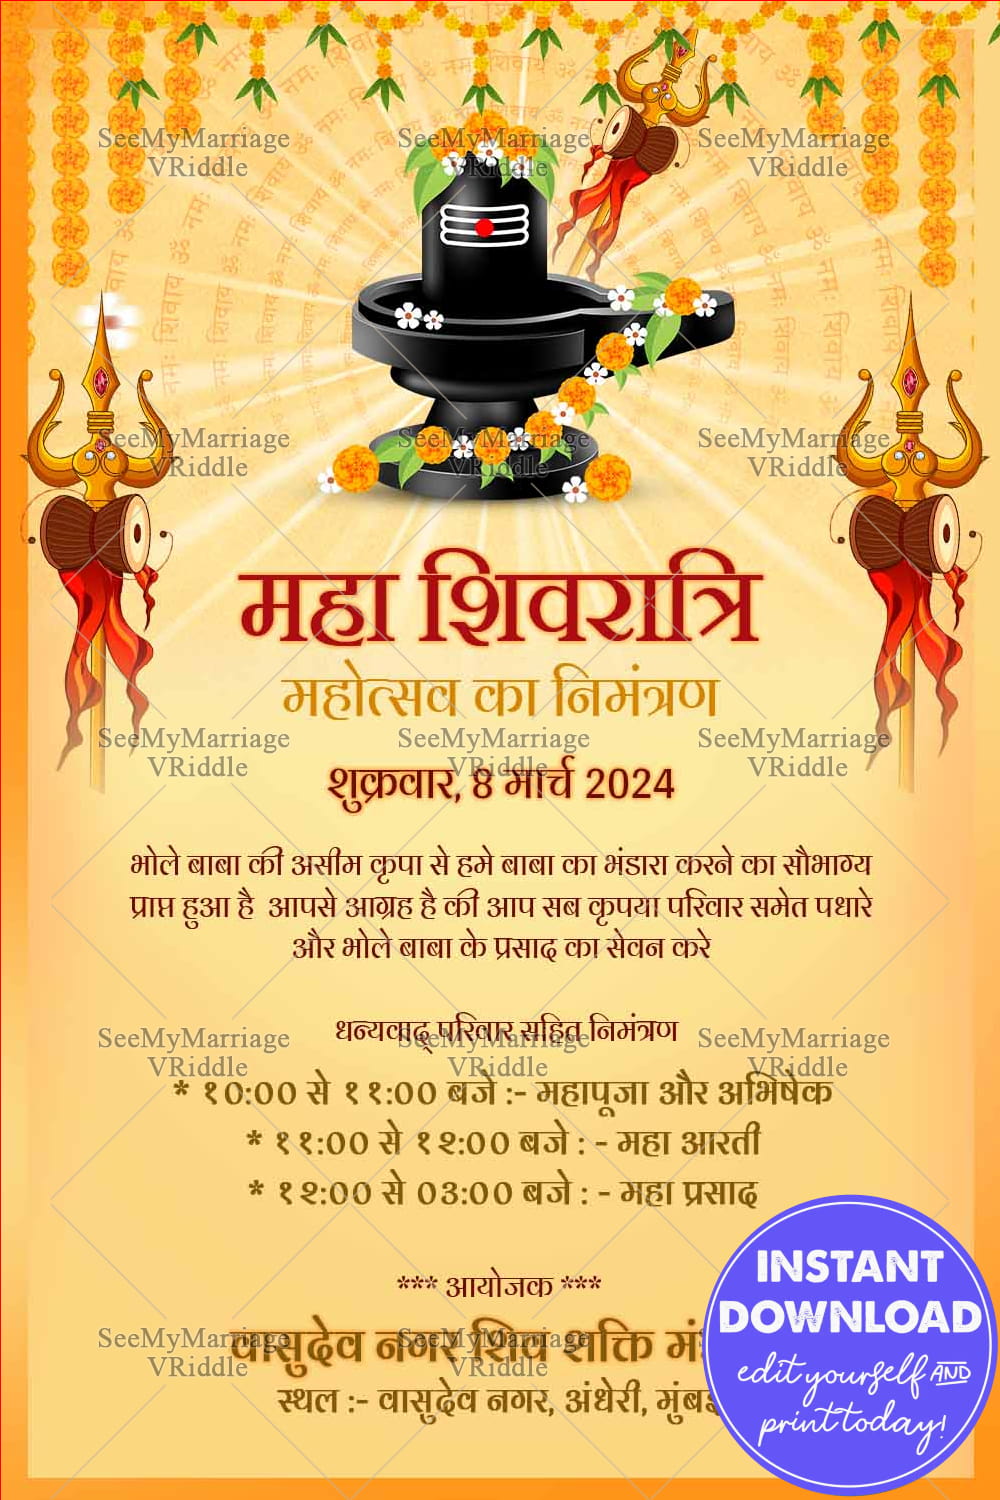 Shiva Ratri Invitation in Cream, Adorned with Hanging Marigold and Sacred Shivalinga